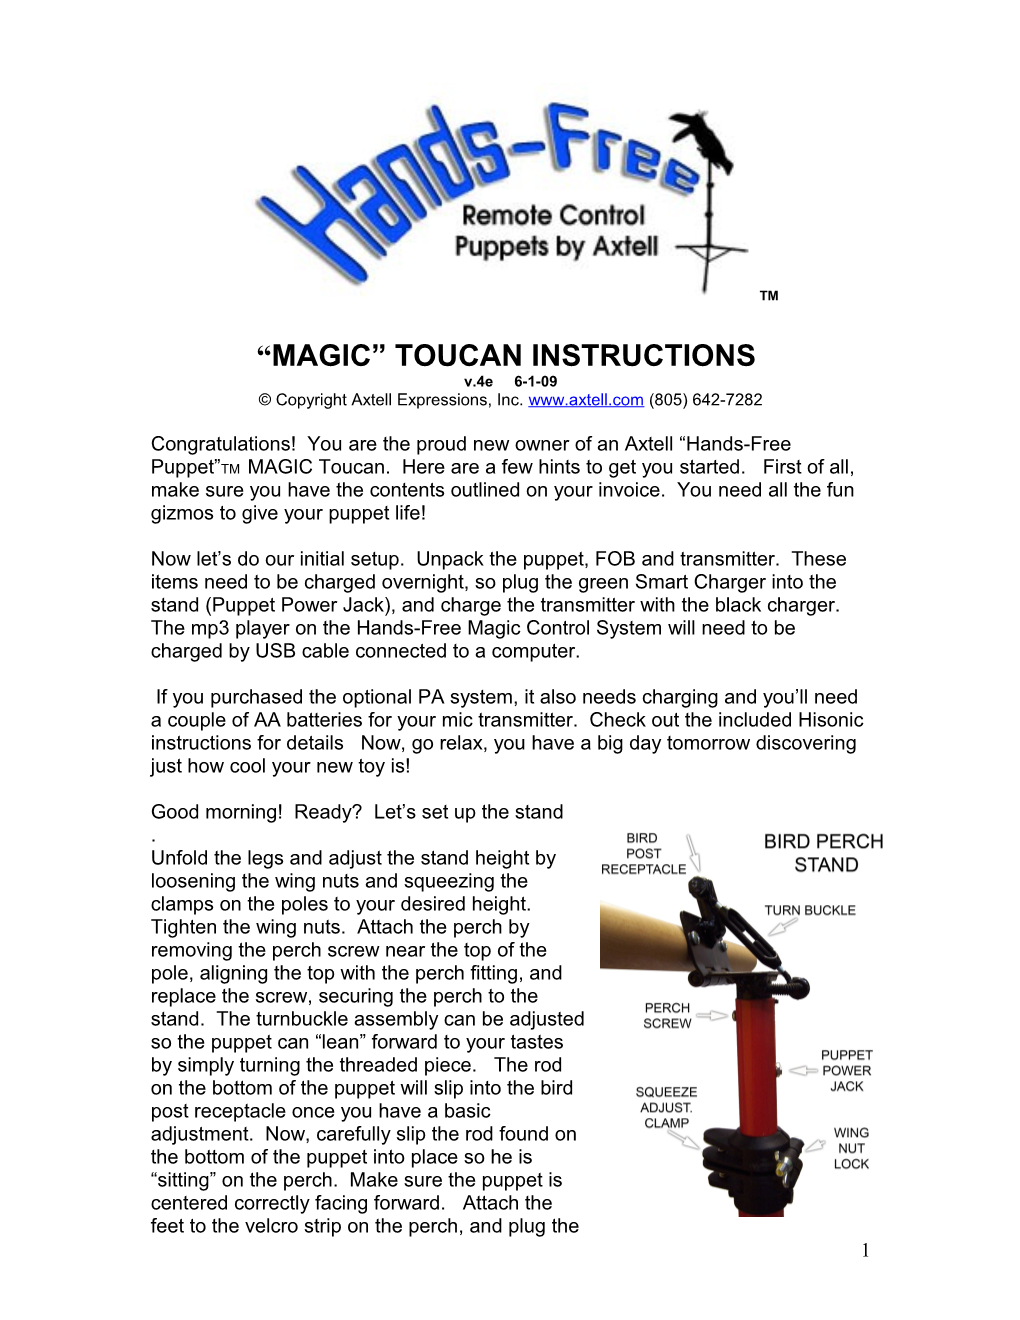 MAGIC TOUCAN INSTRUCTIONS V.4E 6-1-09